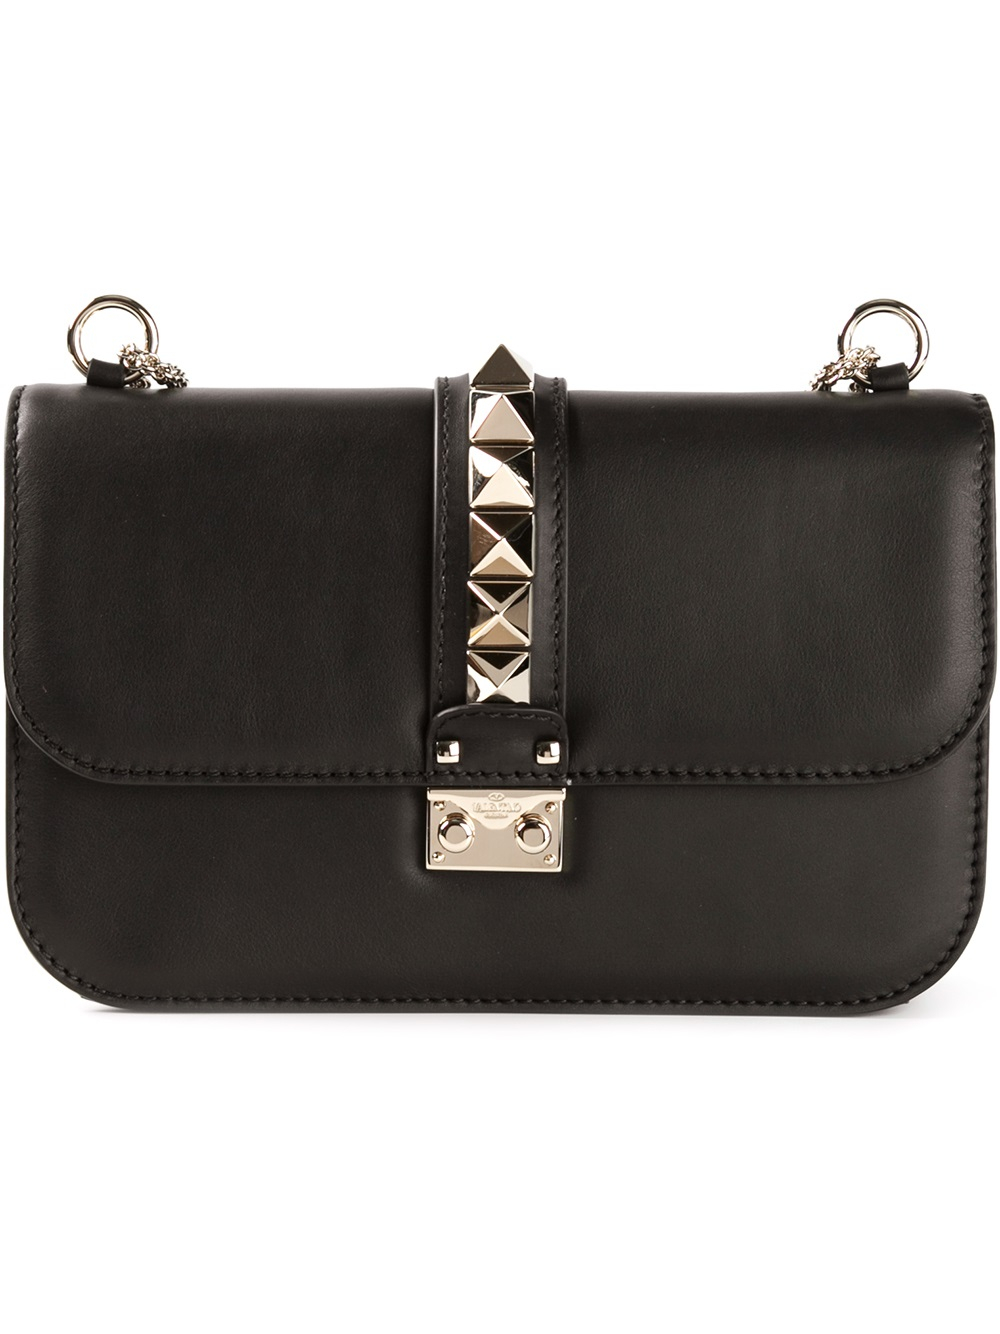 Lyst - Valentino Glam Lock Shoulder Bag in Black